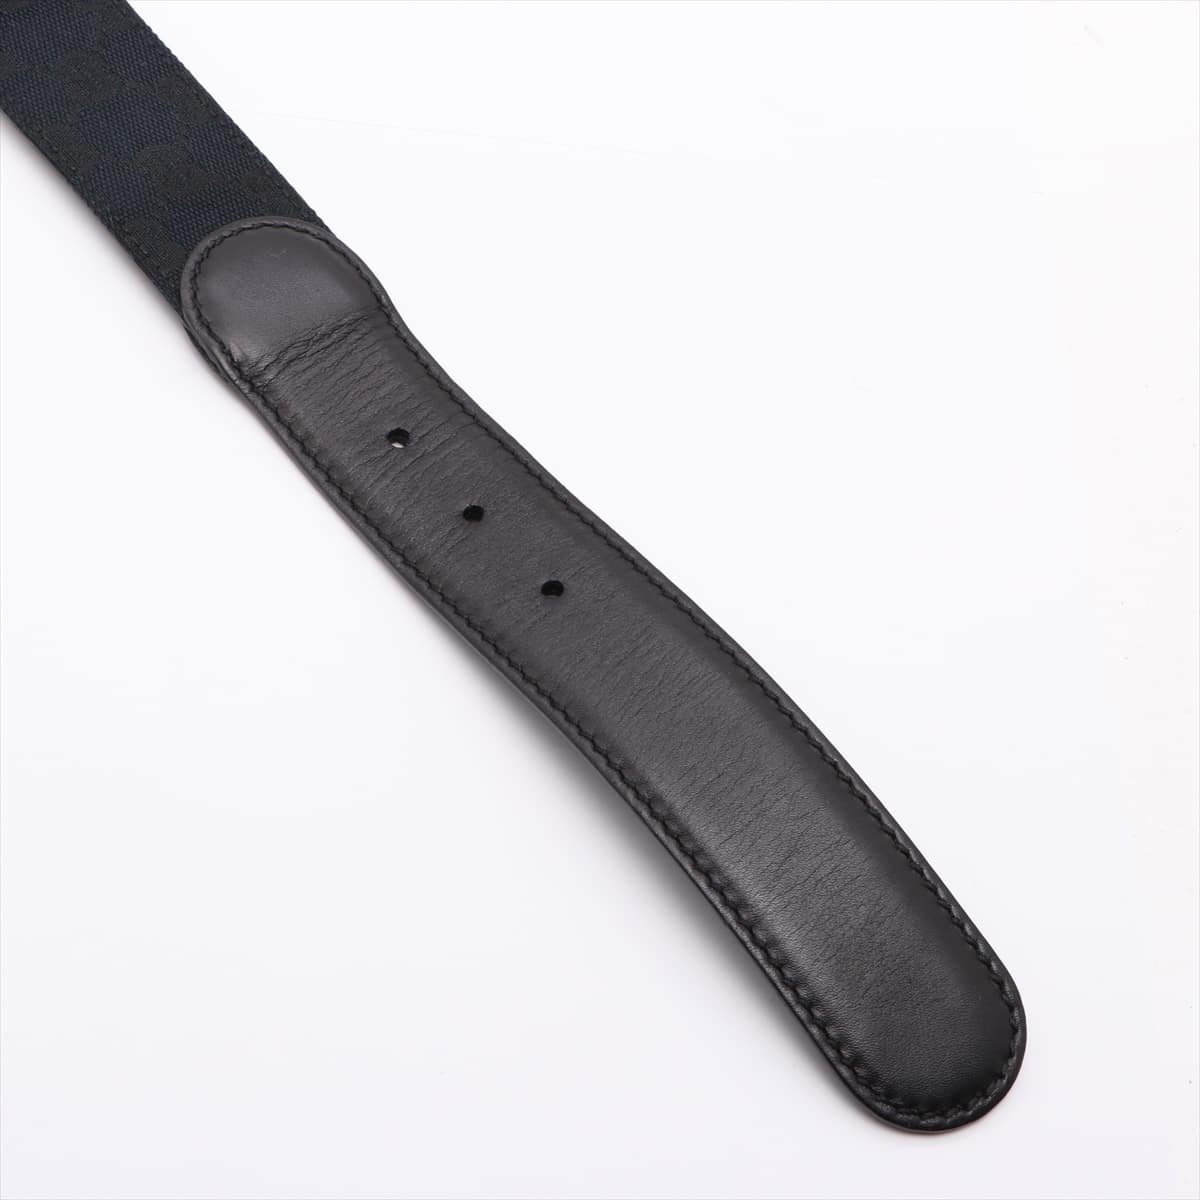 Gucci 159618 GG Canvas Belt 90/36 Canvas & leather Black